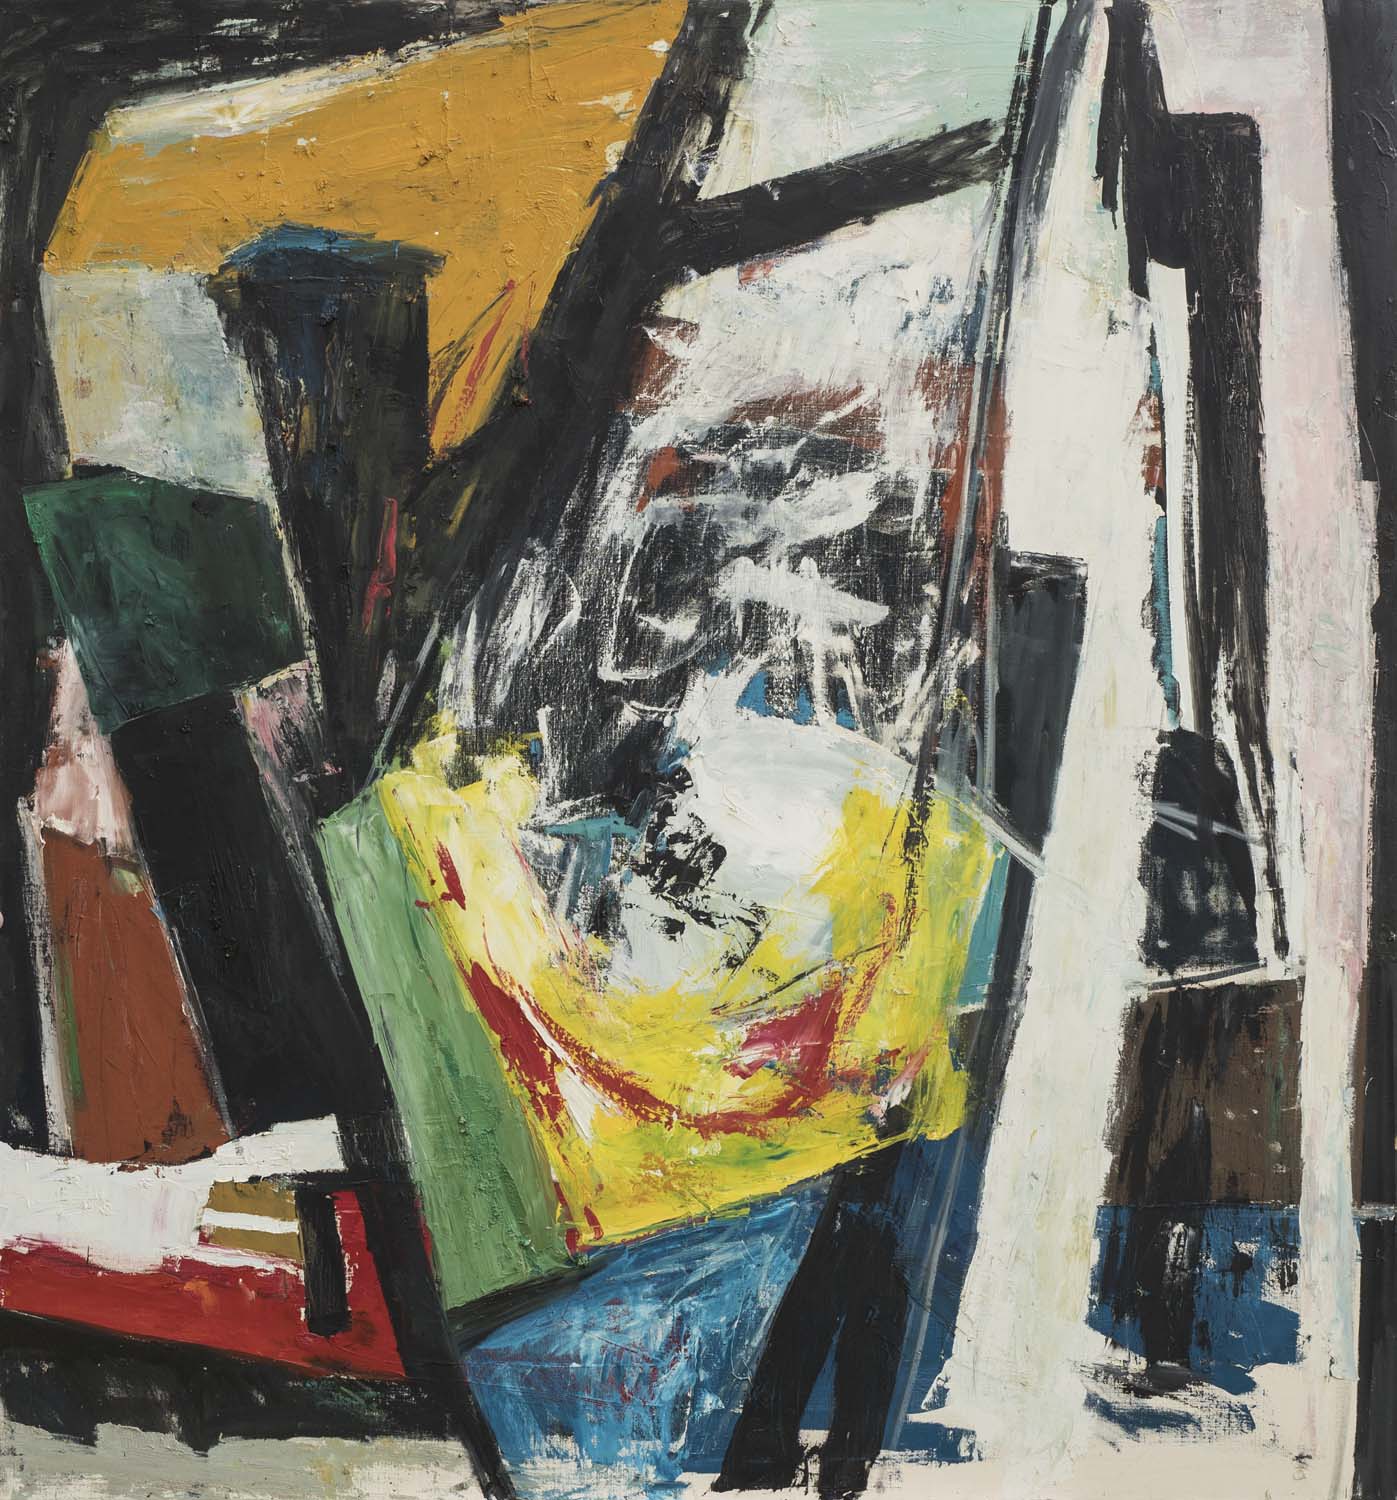 galerie alain hens - andré bogaert - abstract modernism